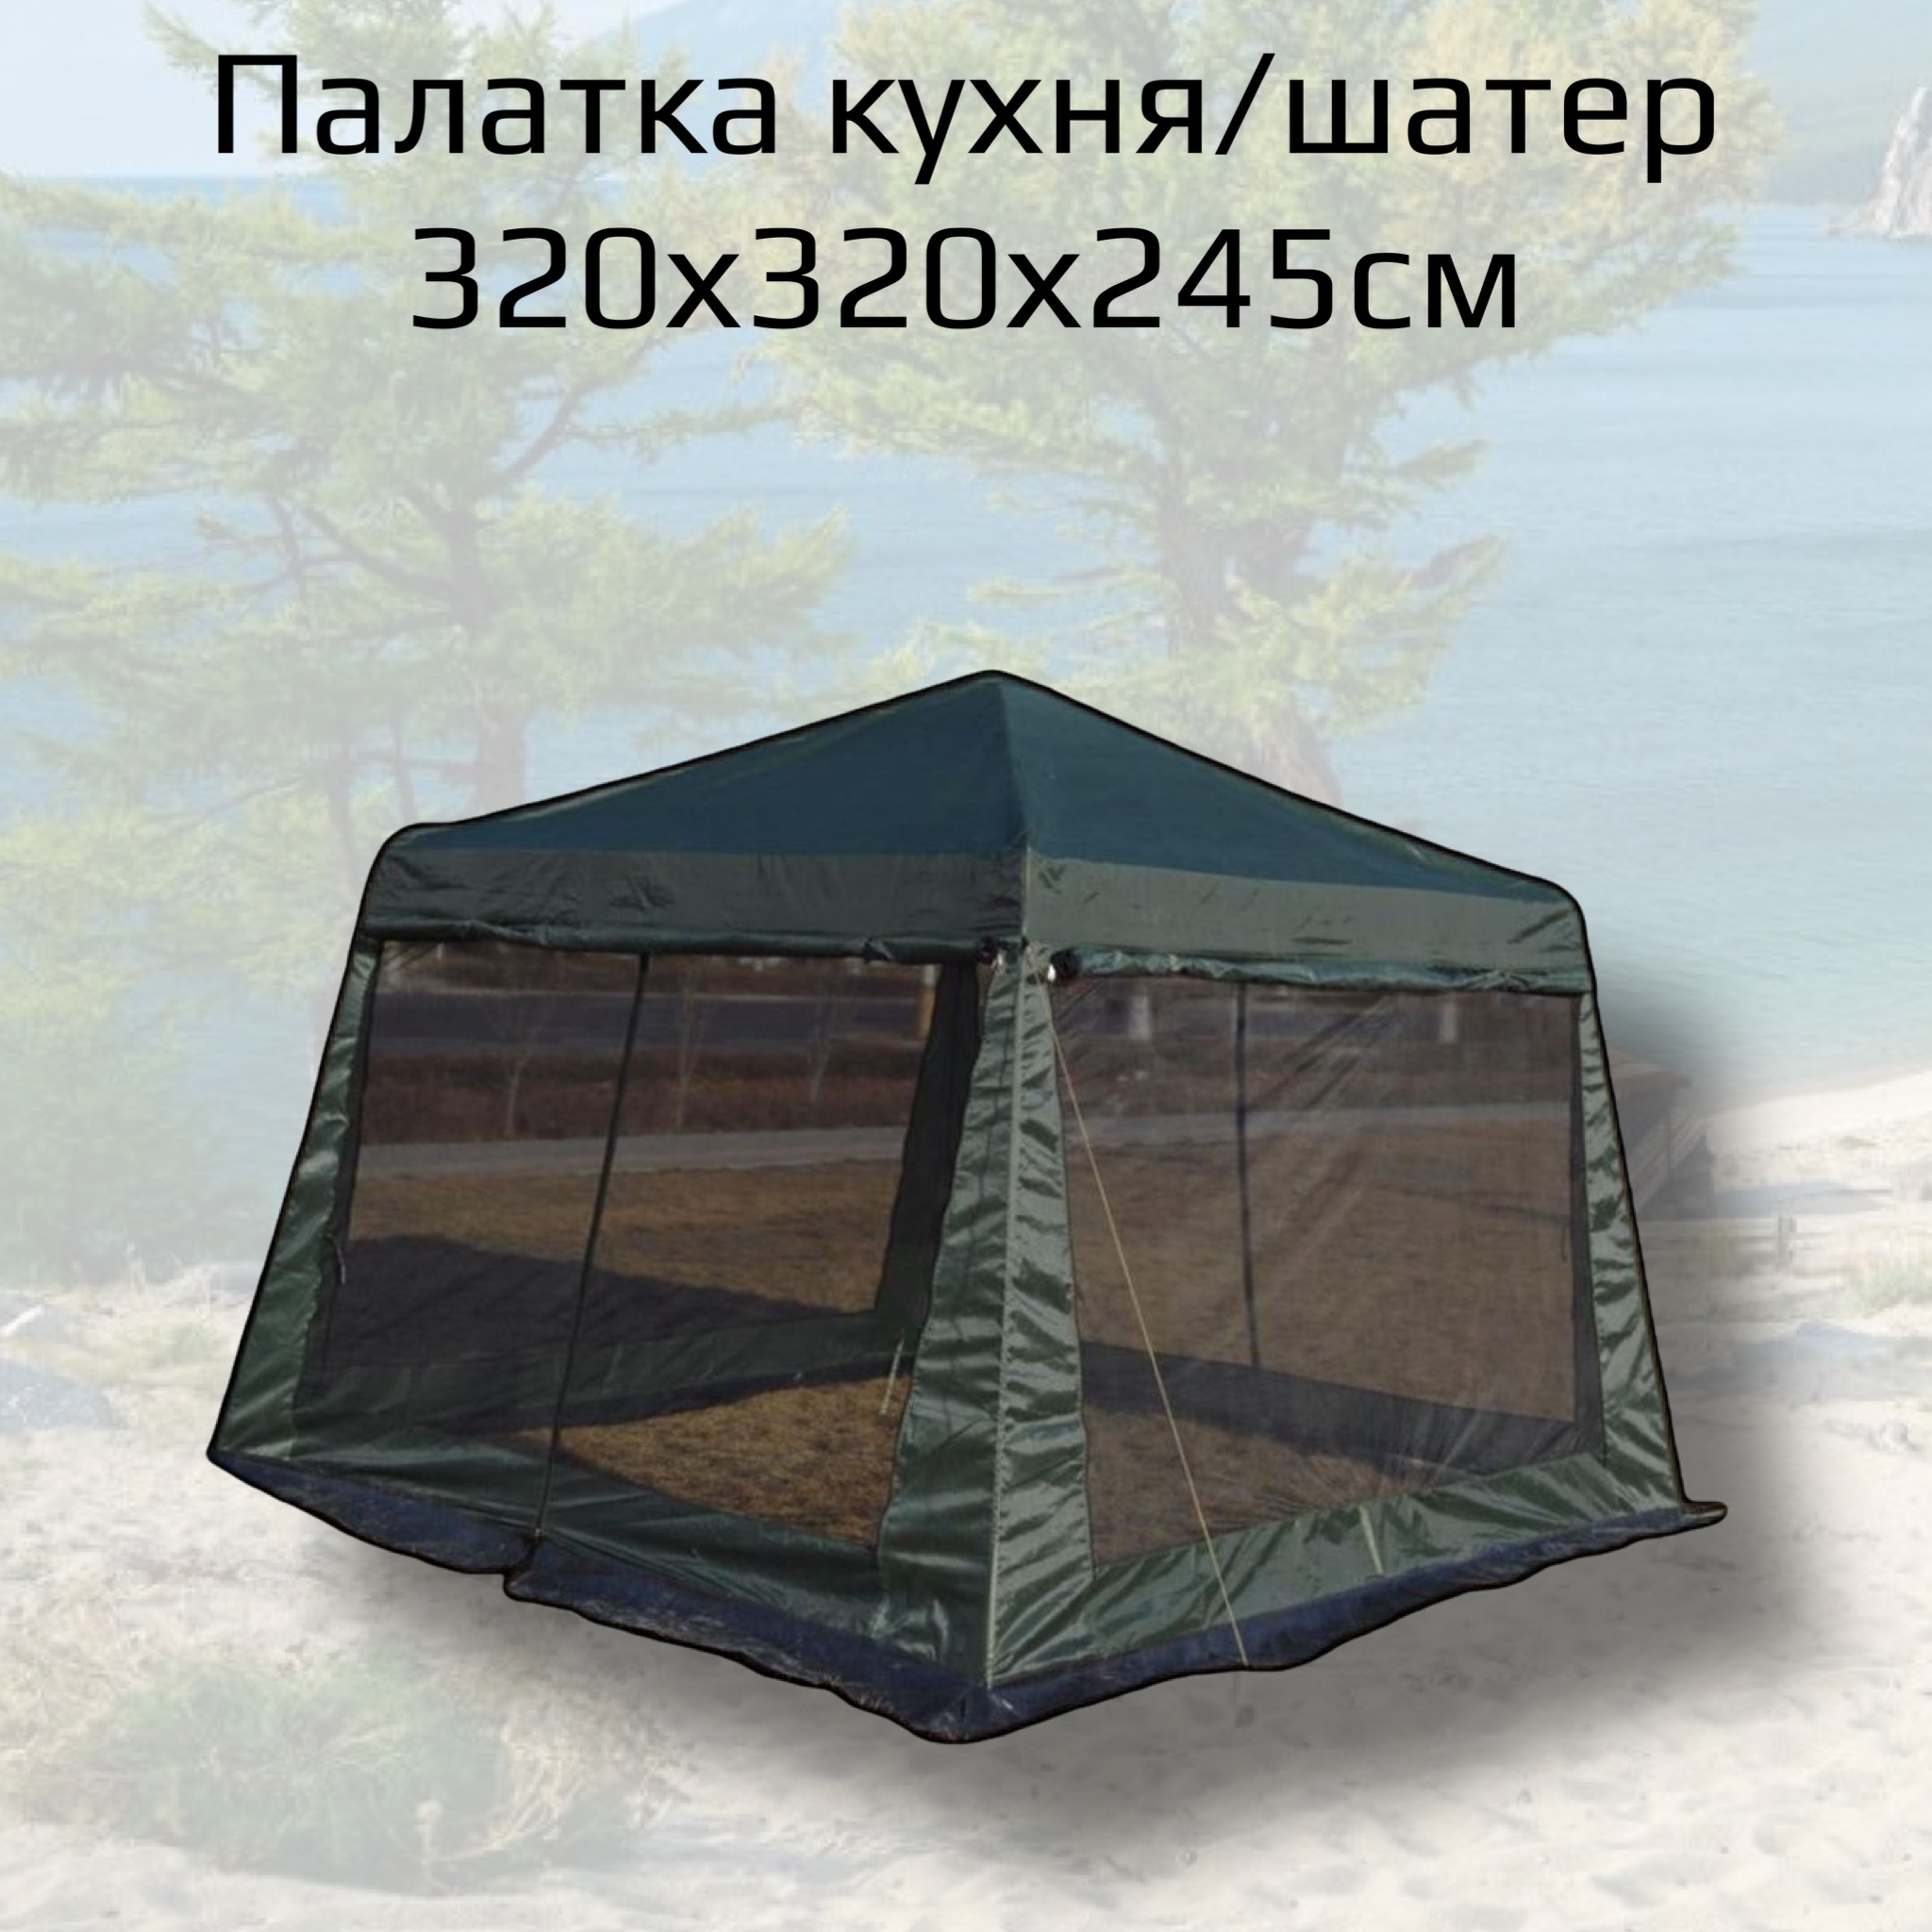 Характеристики Беседка палатка шатер кухня 320х320х245 см, подробное .